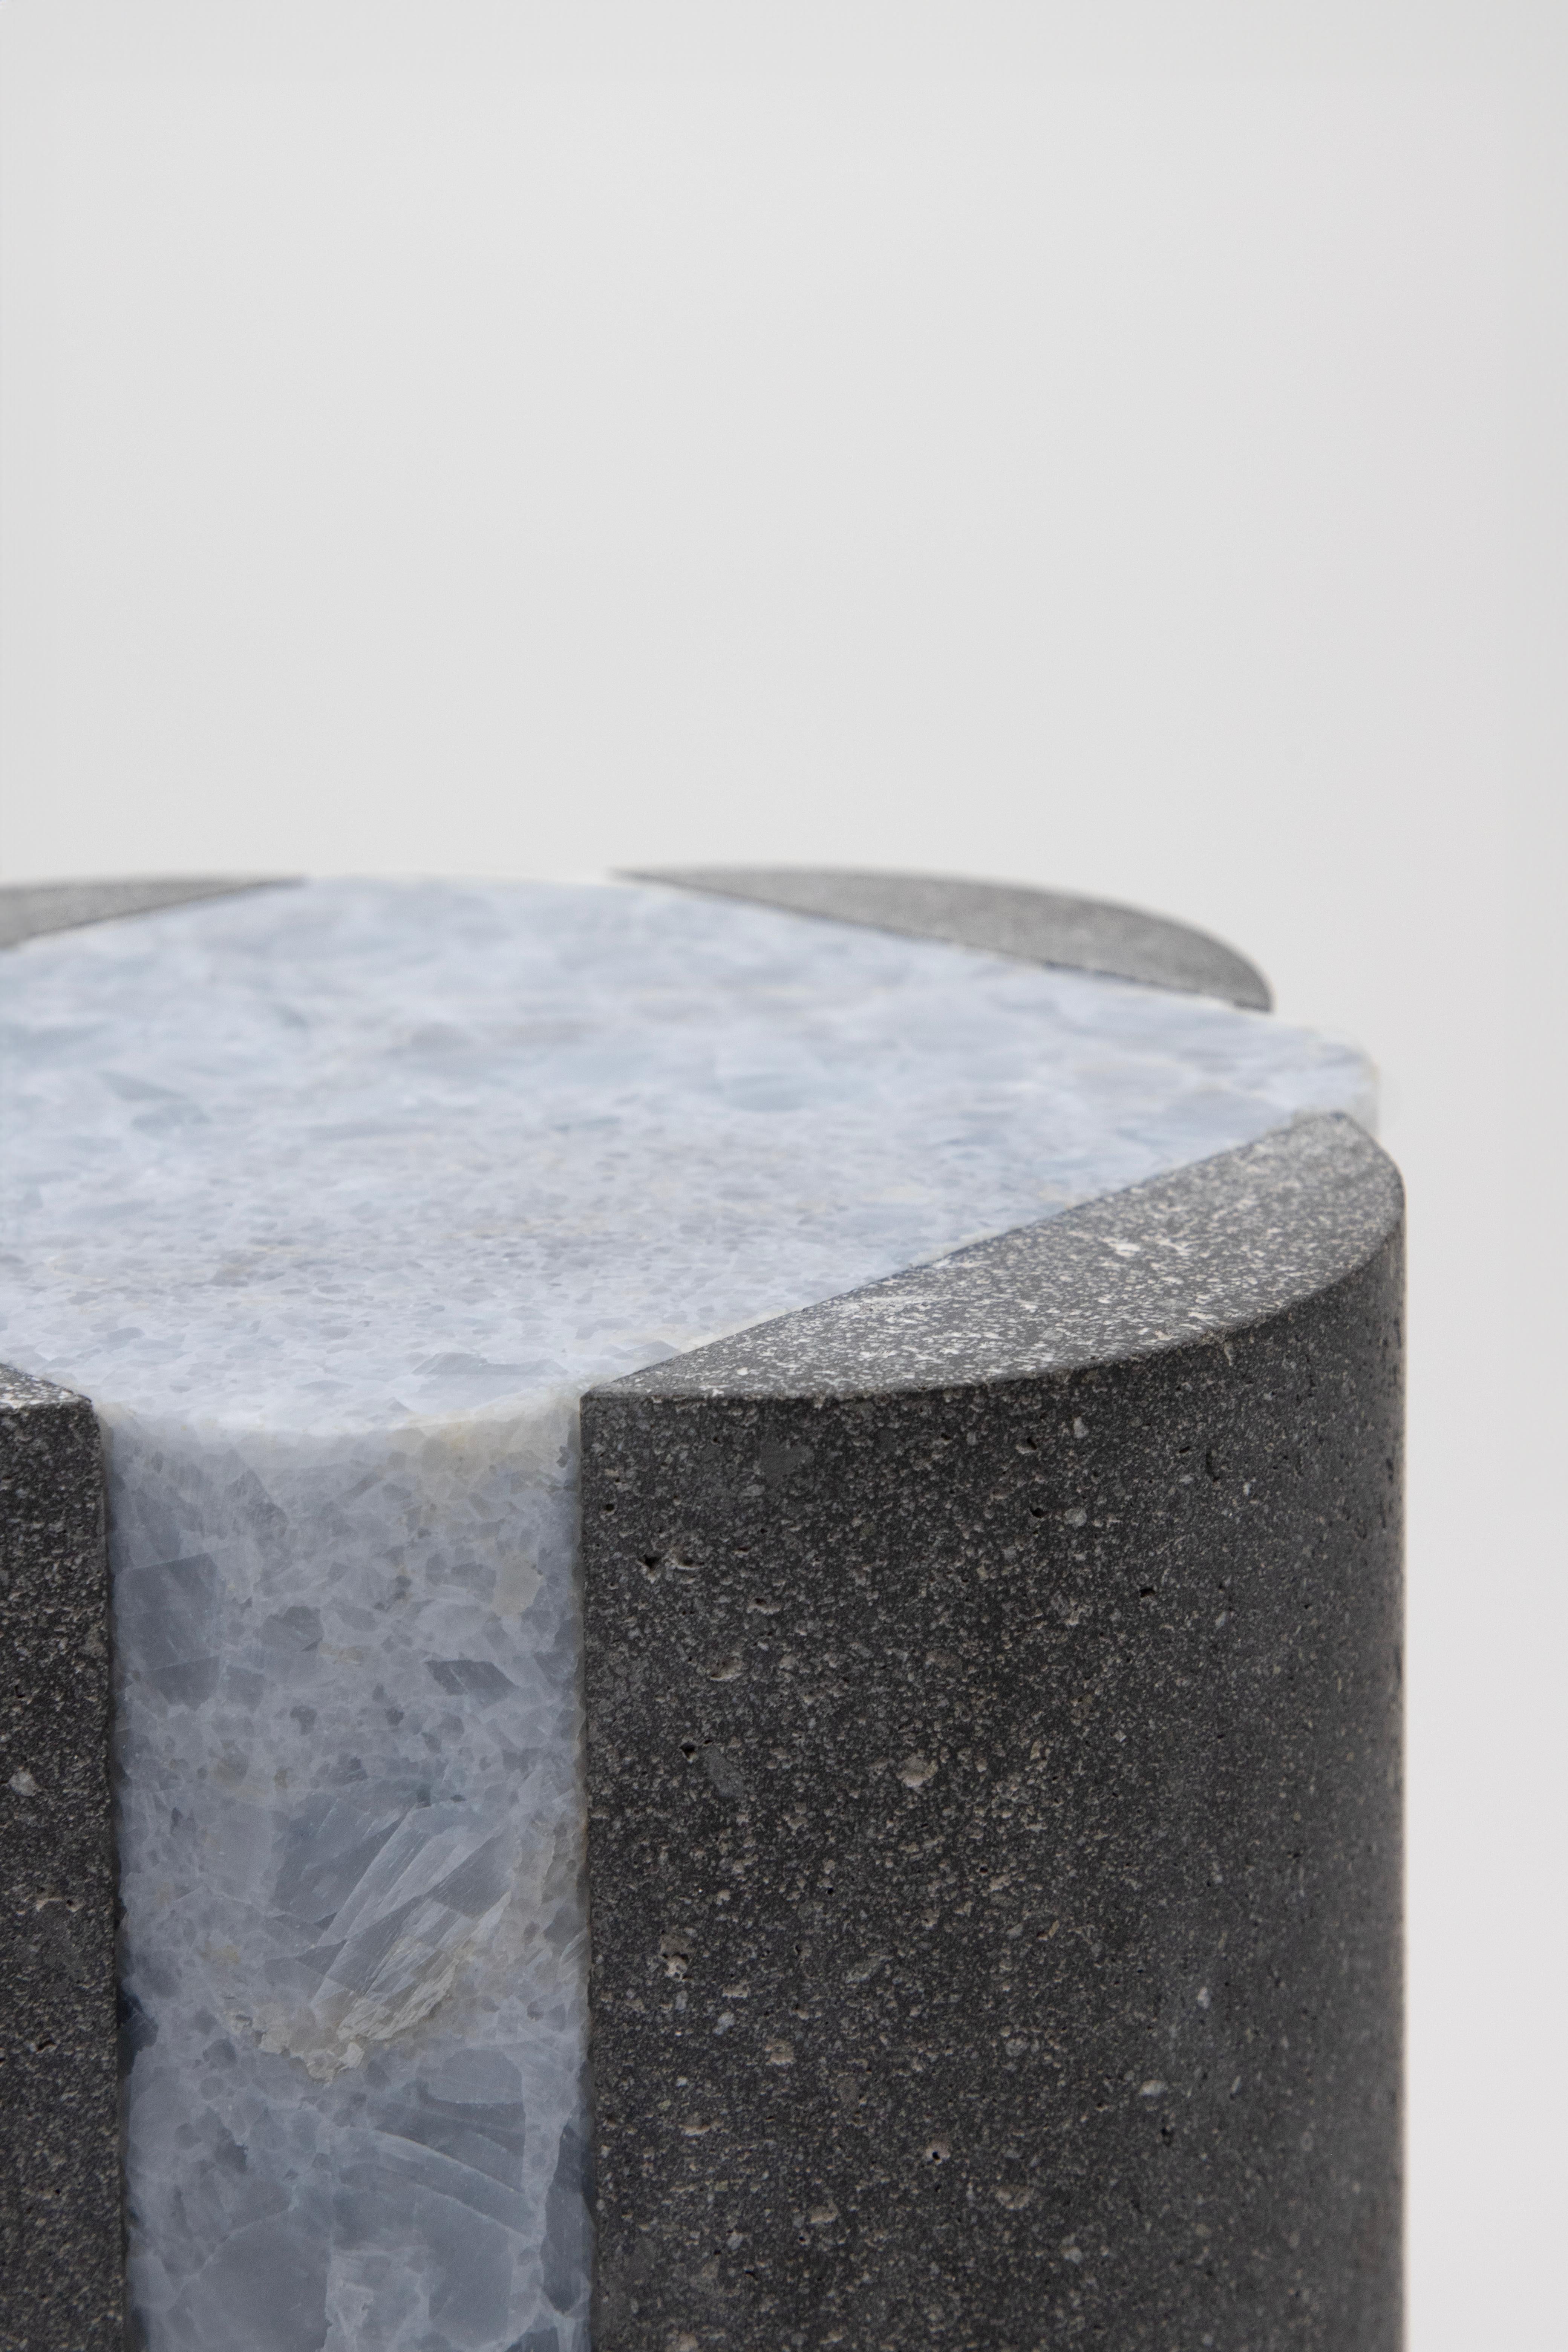 Stone Volcanic Shades II - Sten Studio - Lava stone and blue calcite For Sale